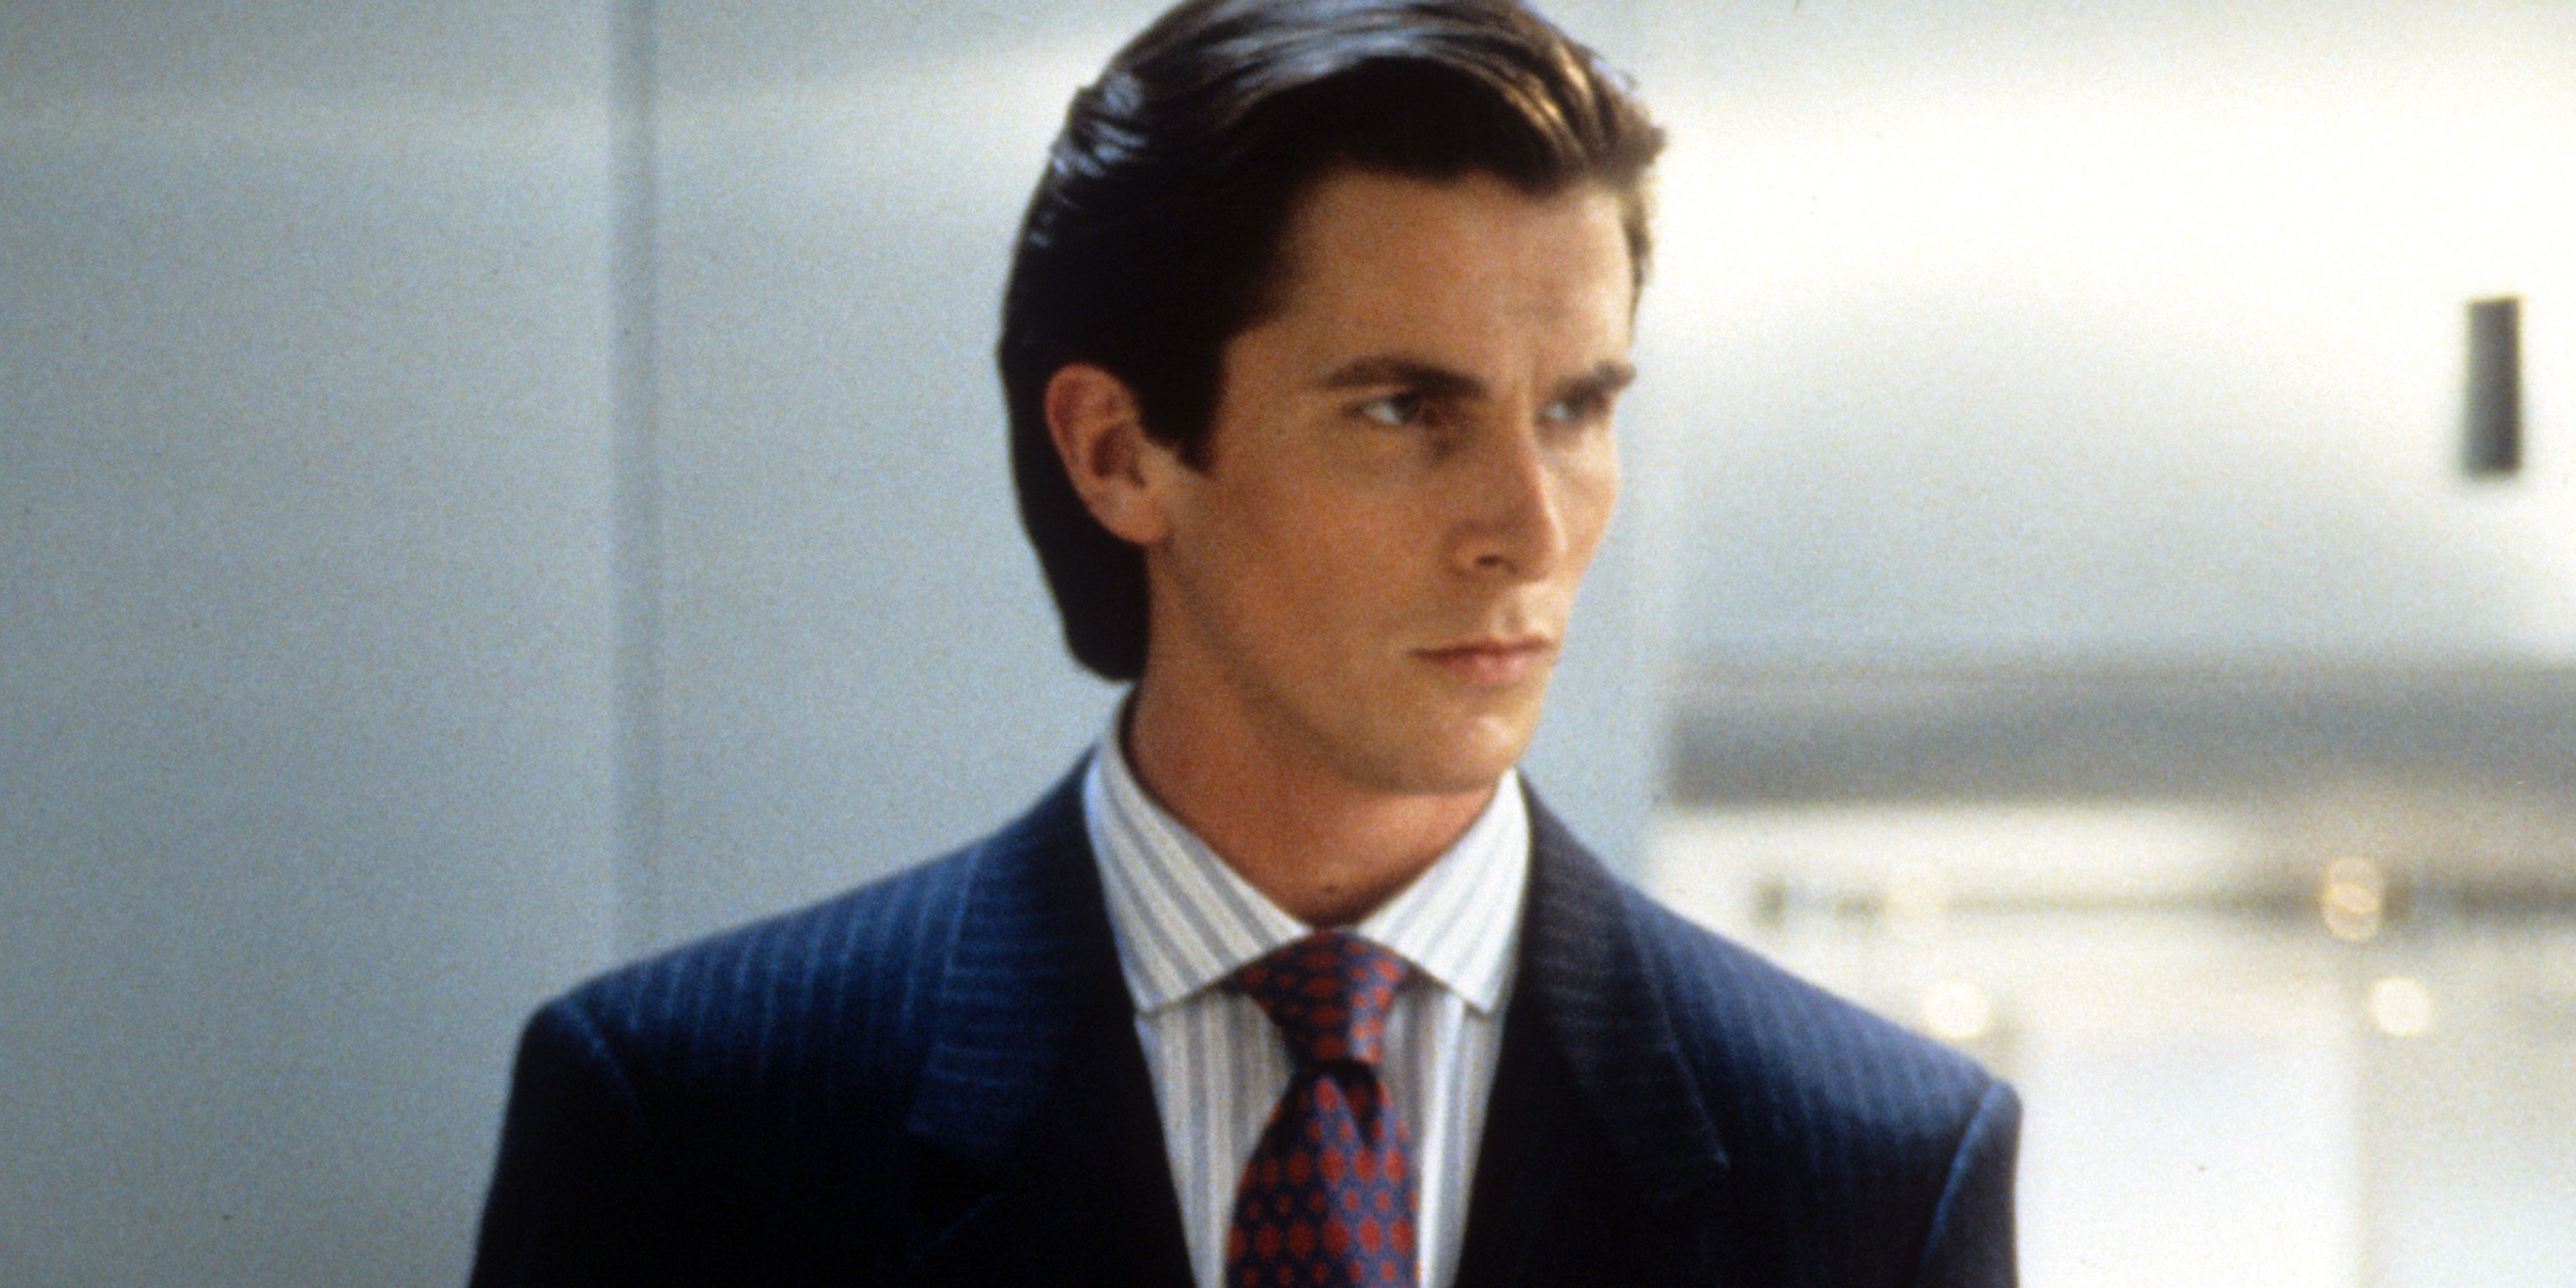 Christian Bale as Patrick Bateman in American Psycho.